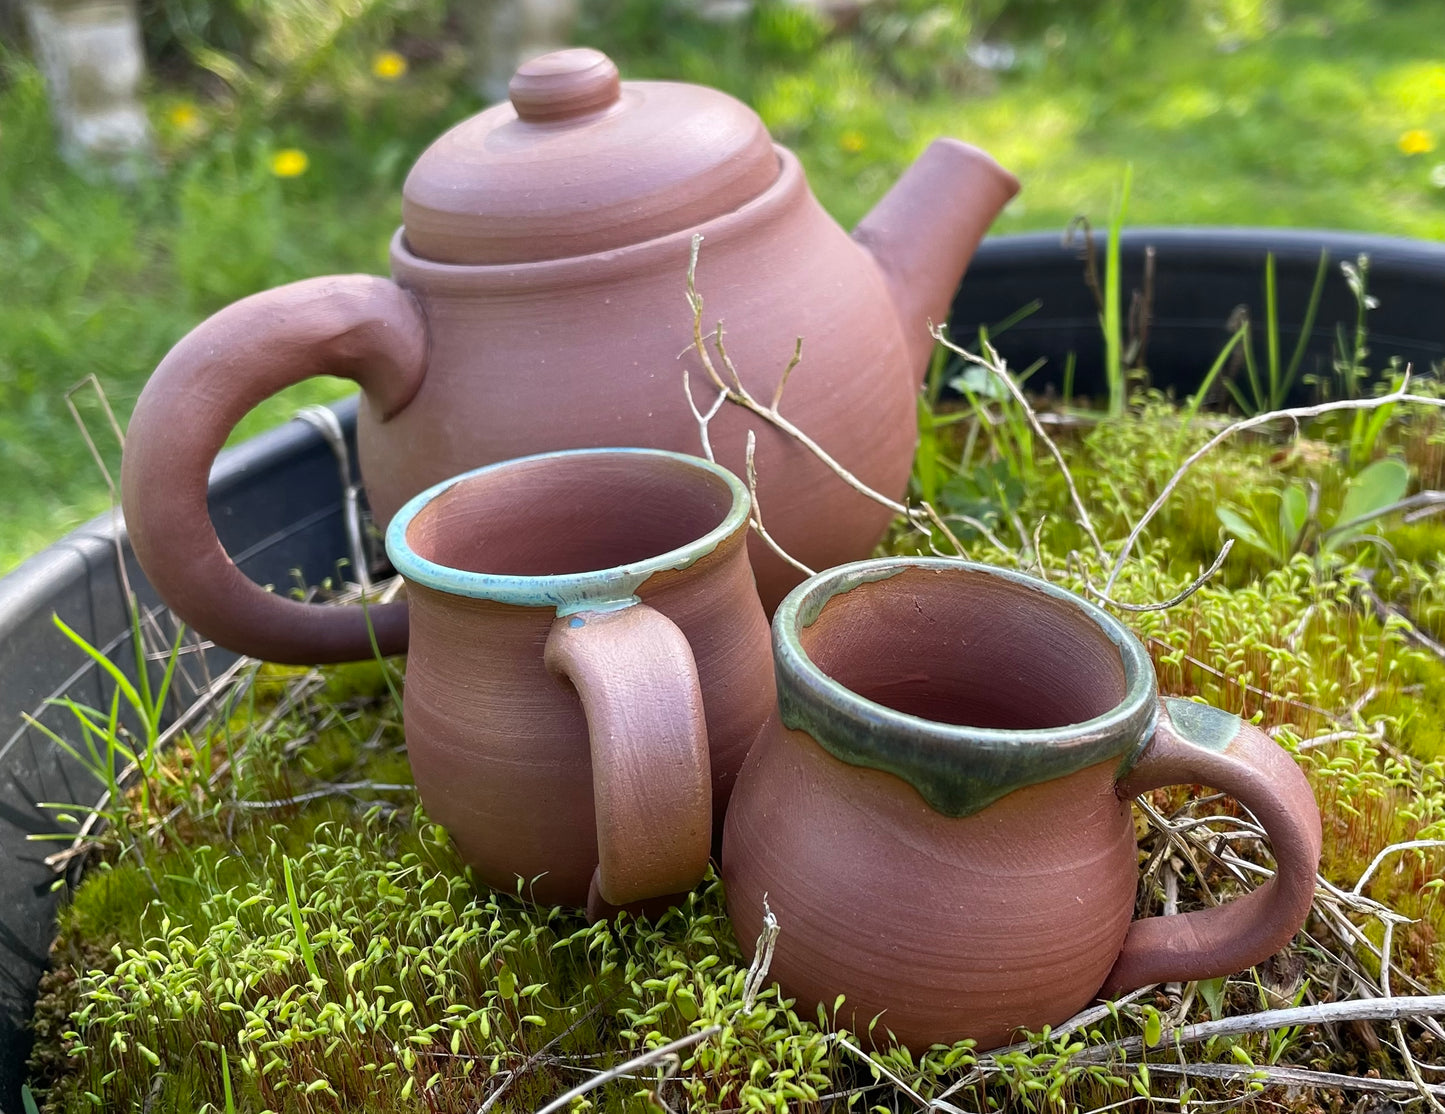 Child's Tea Set with green mugs